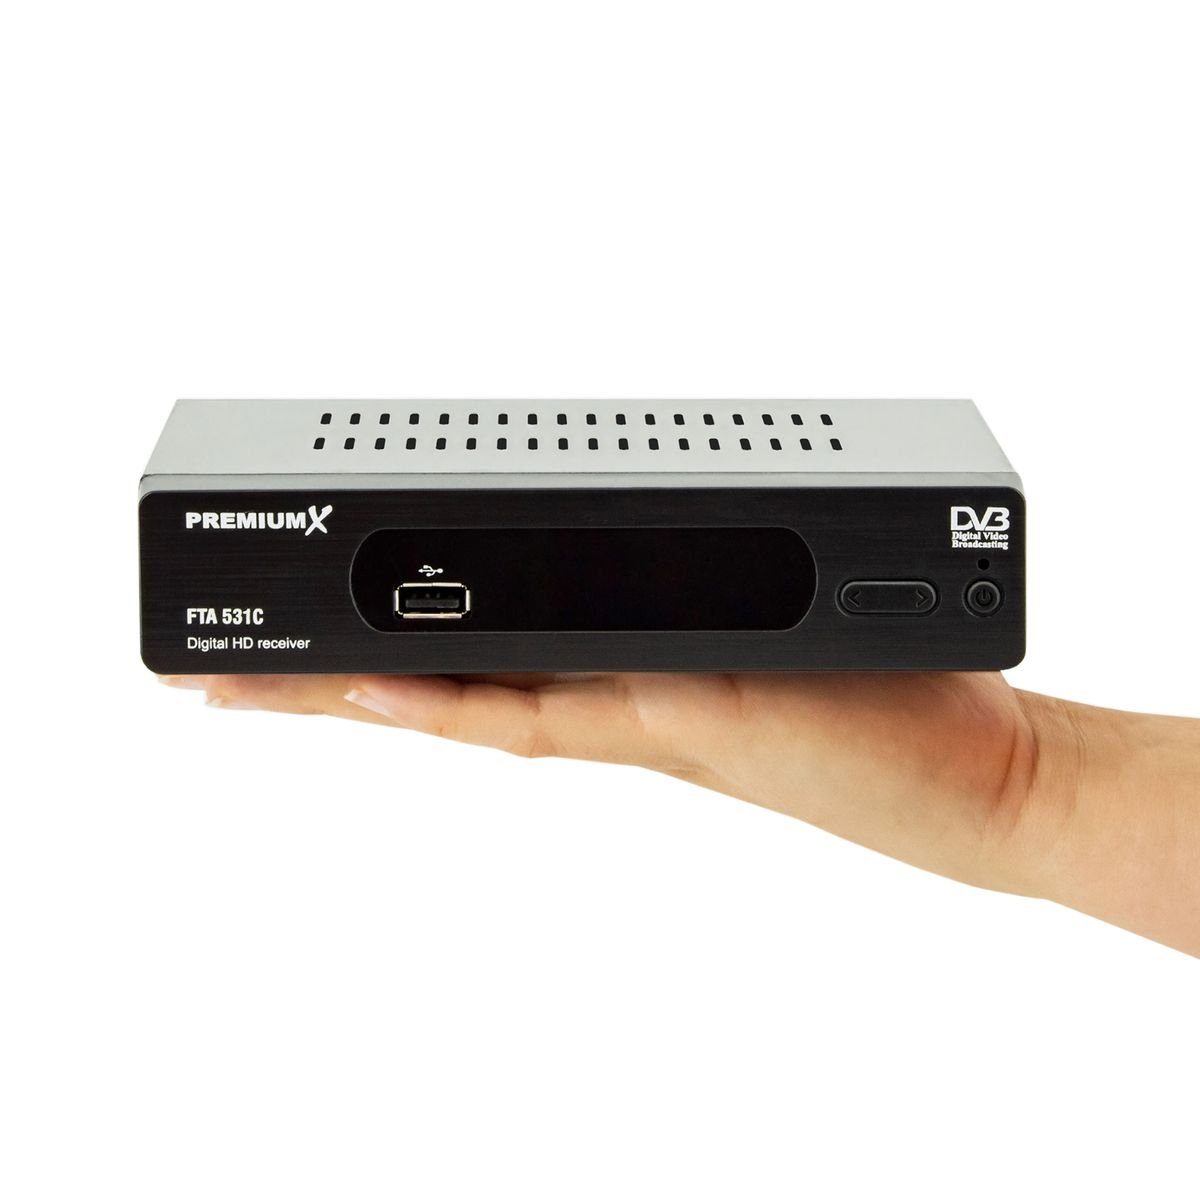 USB FullHD Kabel TV 531C SCART FTA HDMI Digital Kabel-Receiver Receiver PremiumX DVB-C